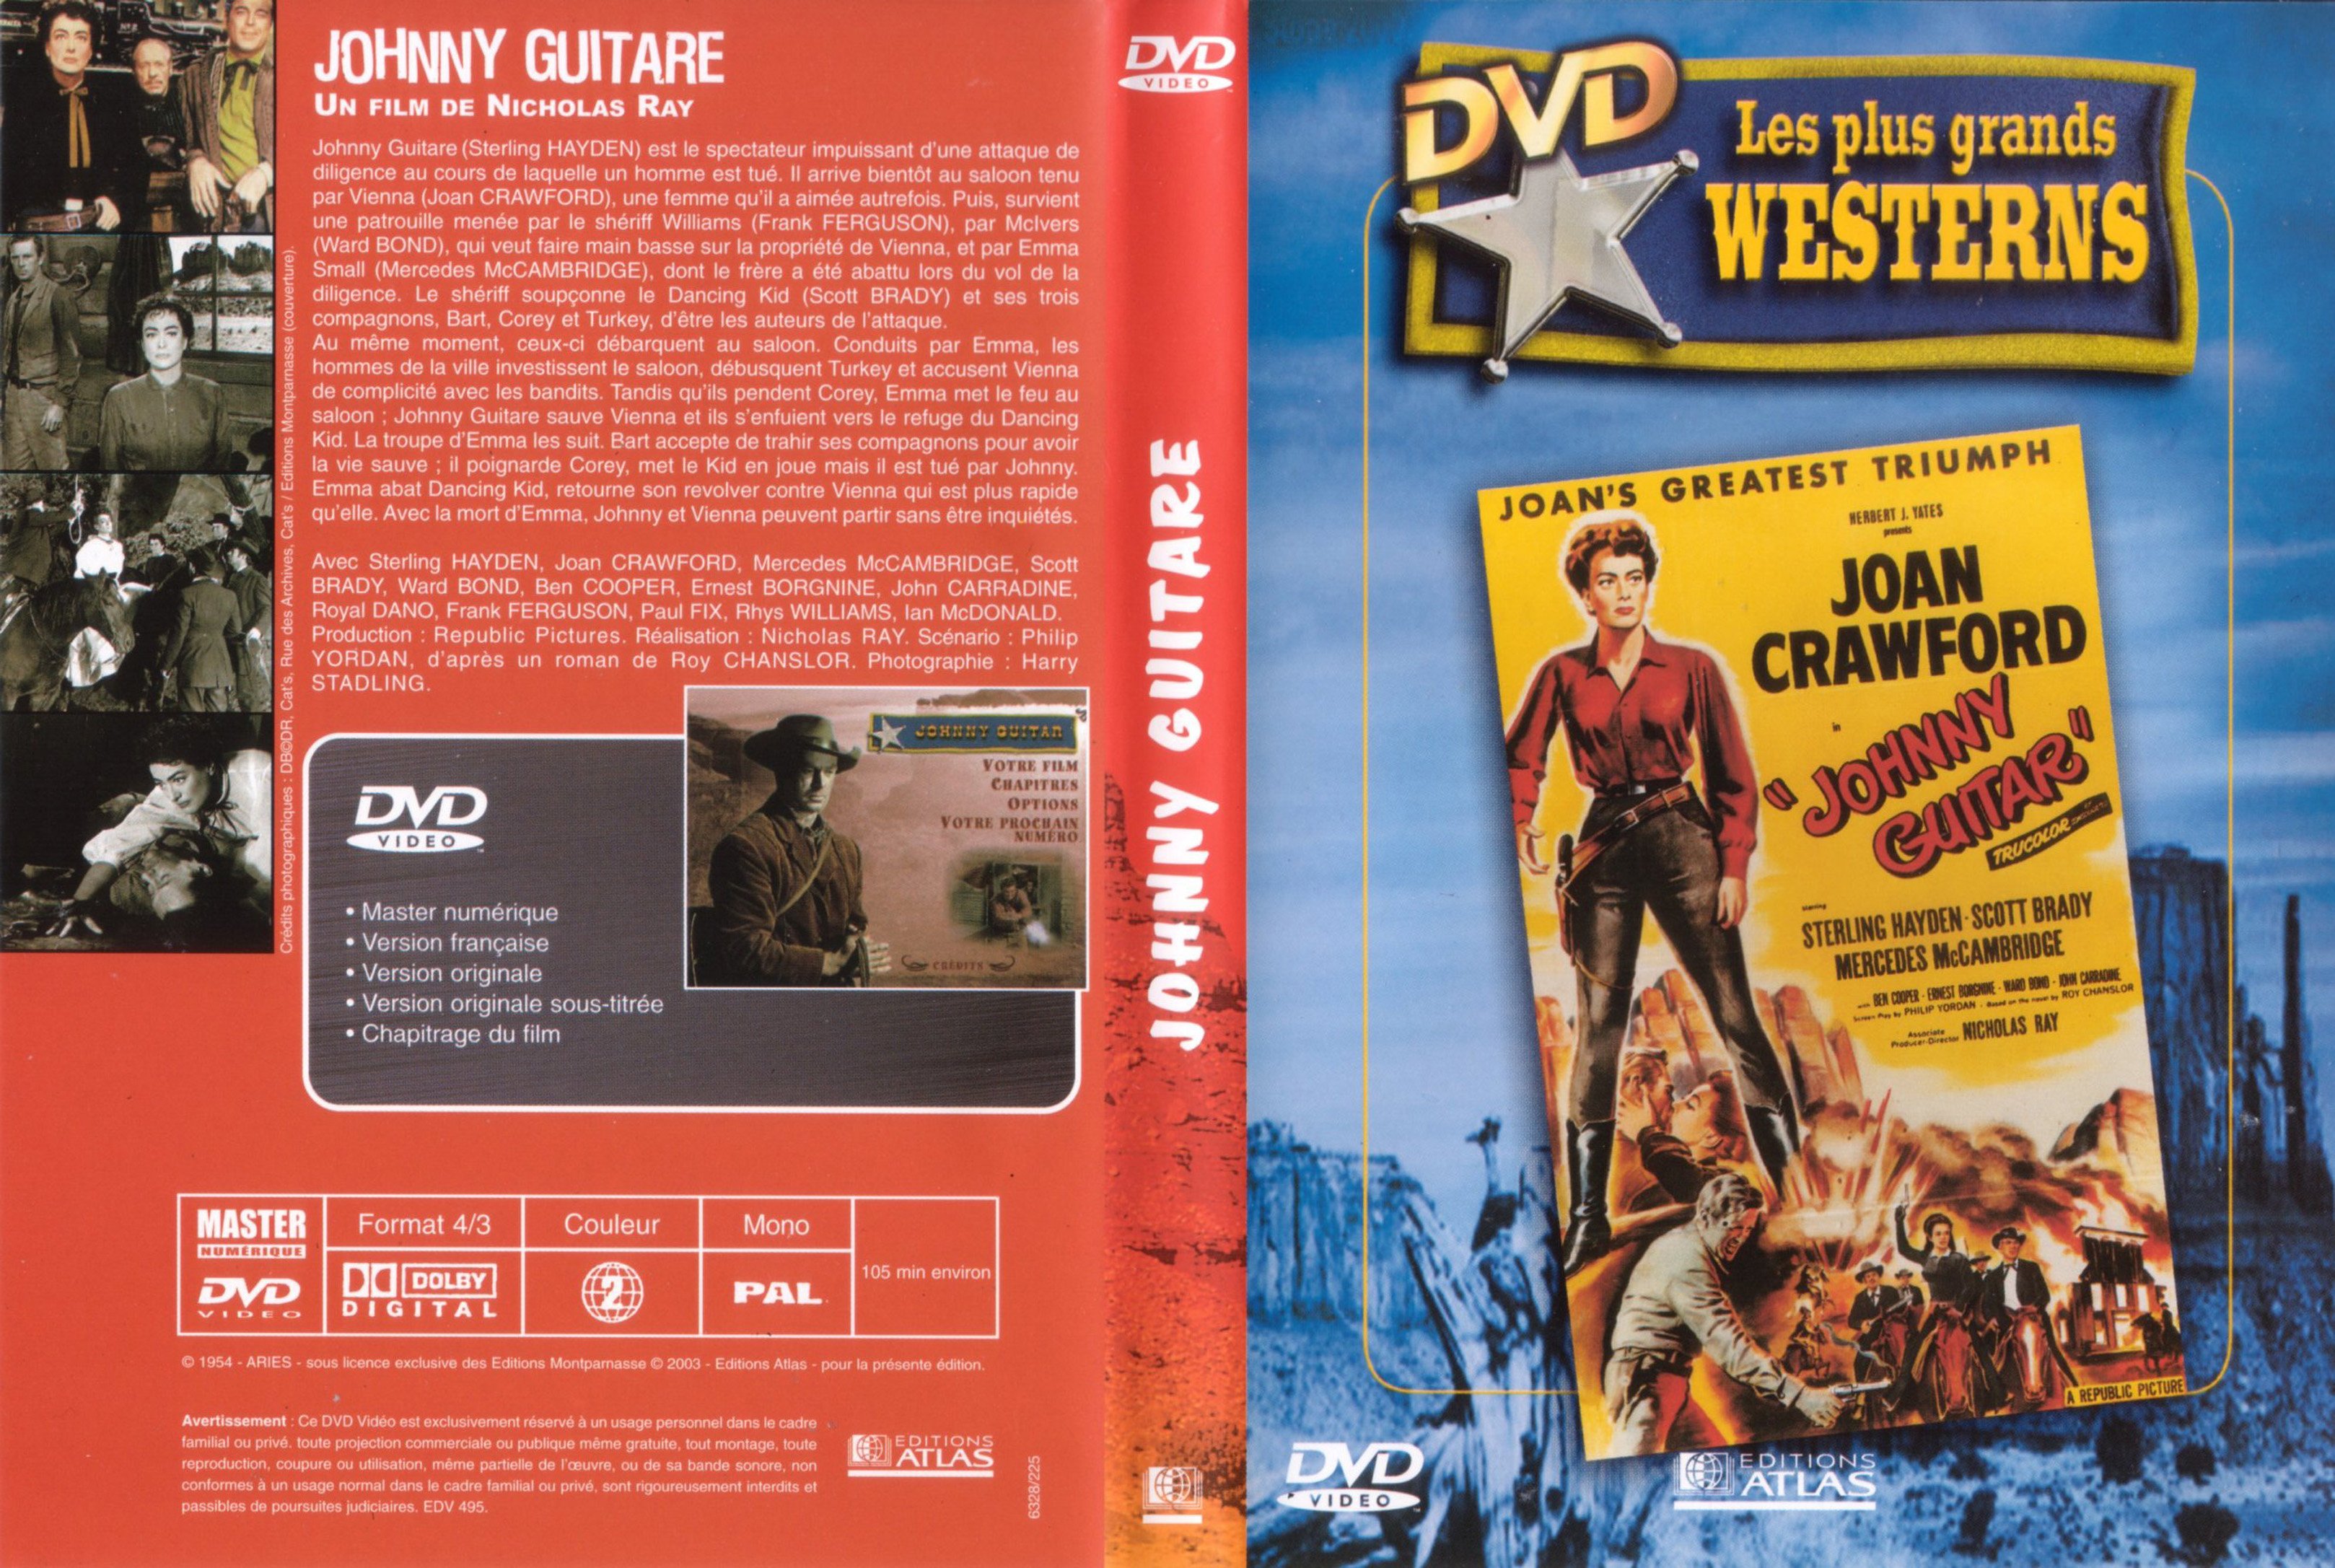 Jaquette DVD Johnny Guitar v2